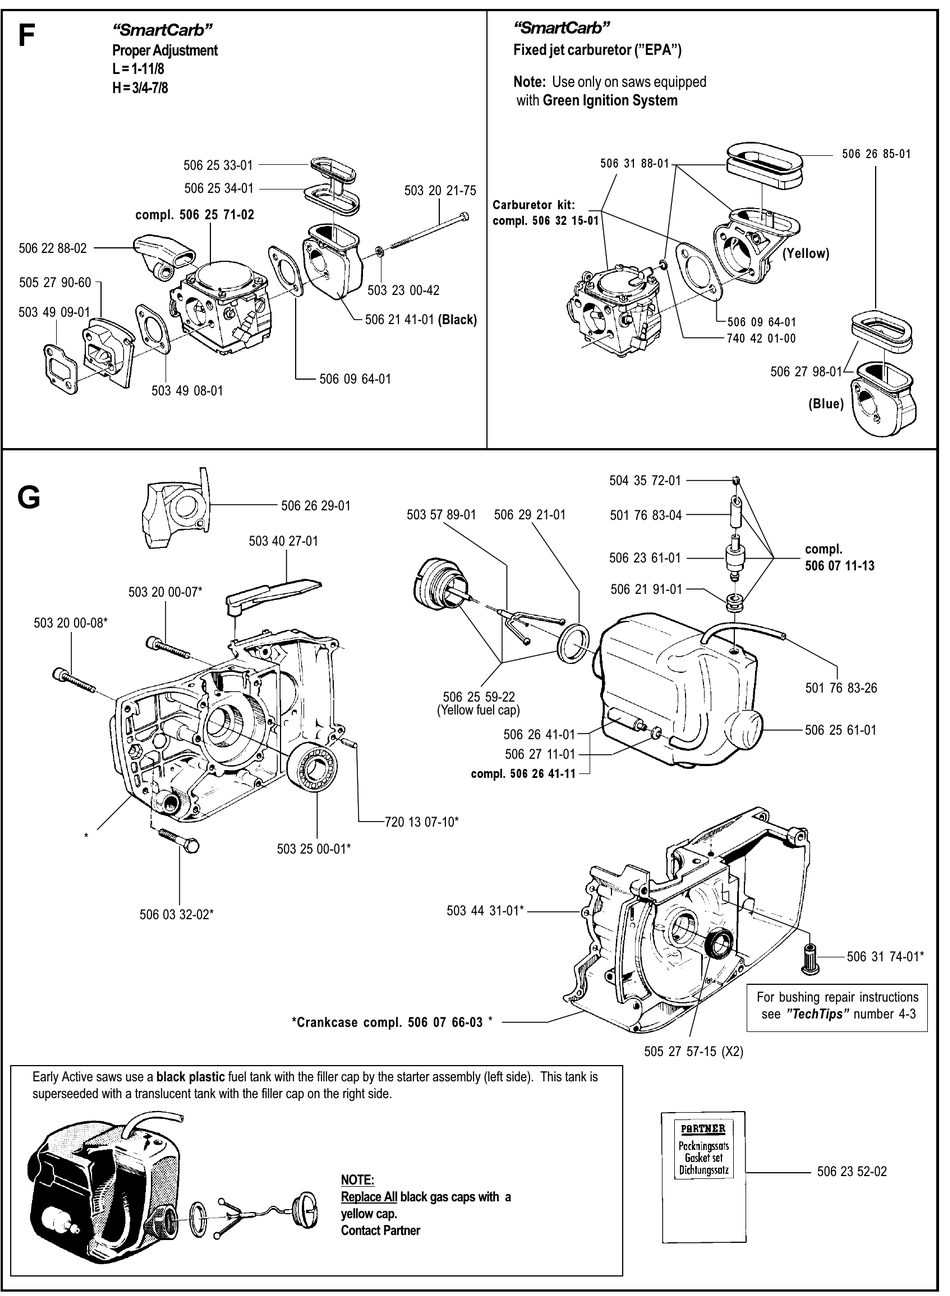 Adjusting a fixed-jet carburettor